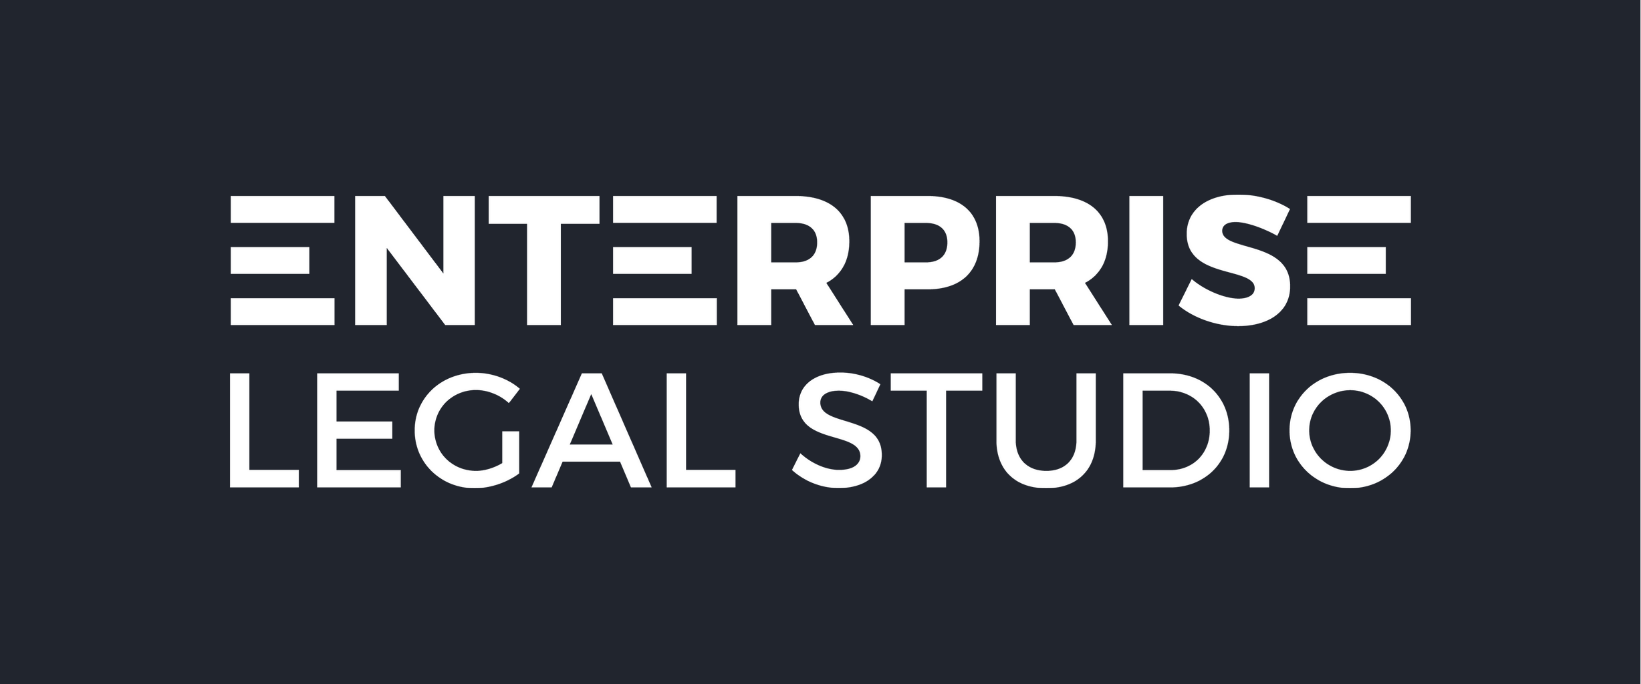 Enterprise Legal Studio